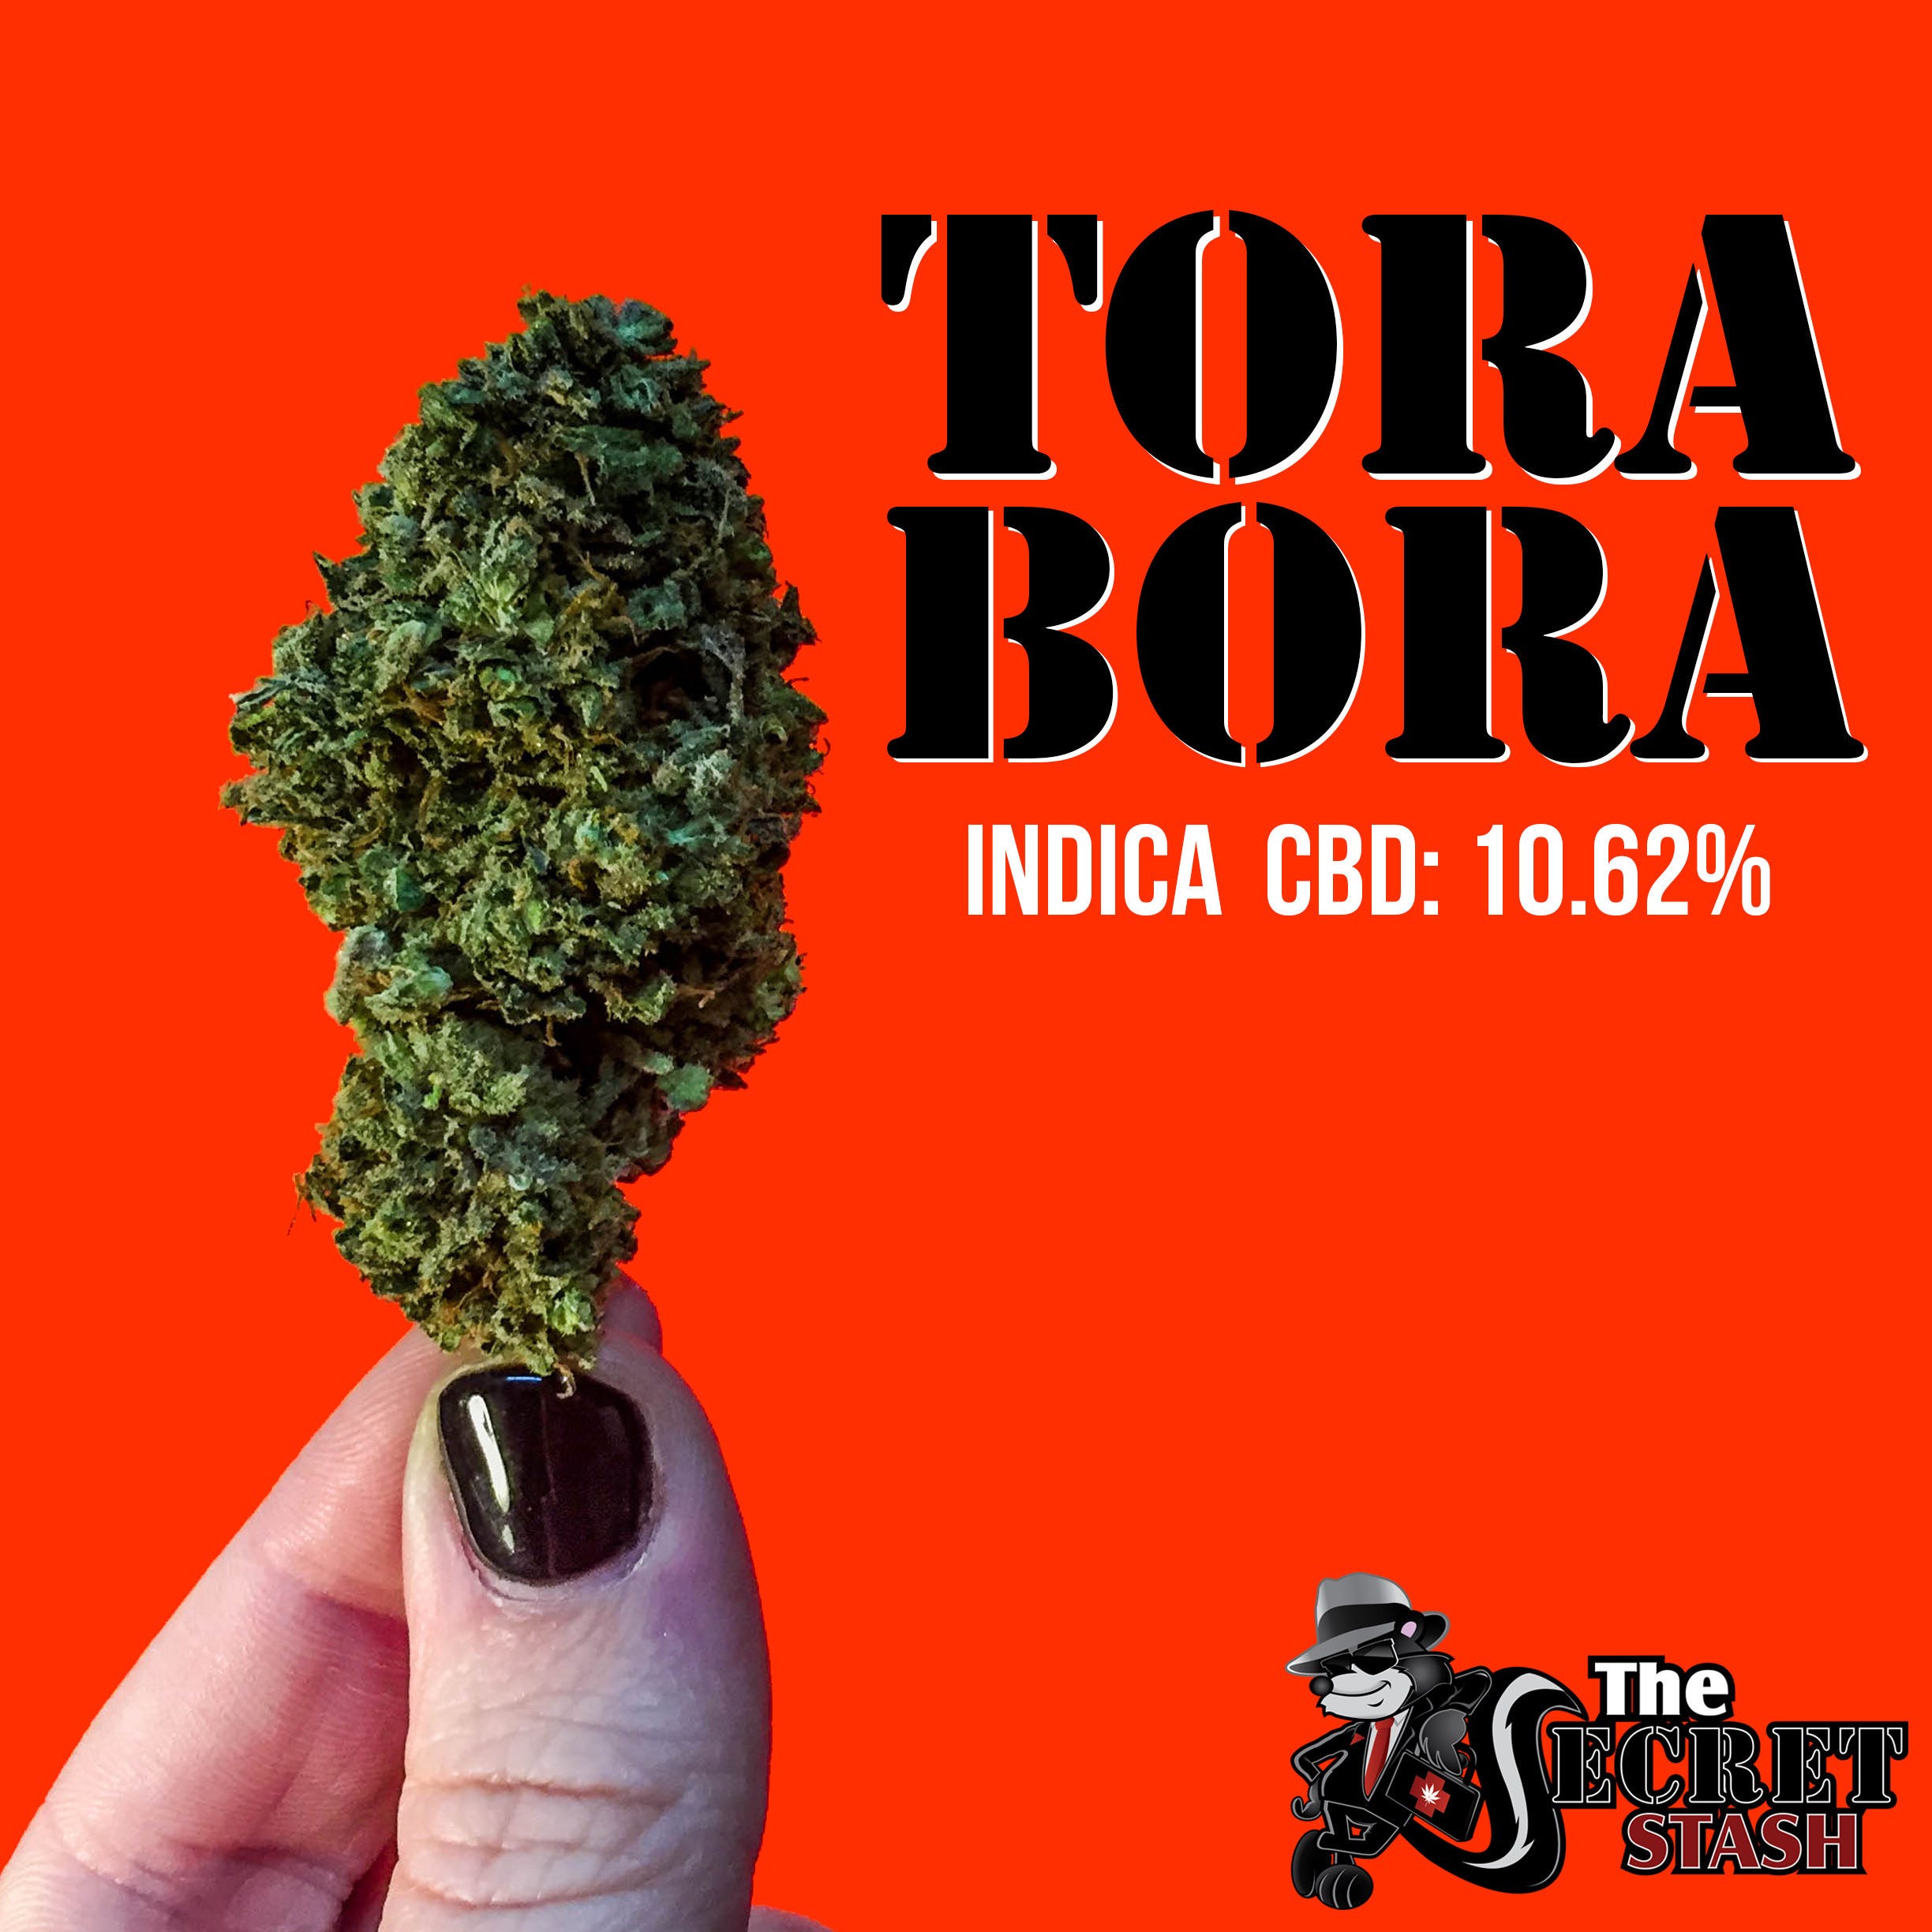 marijuana-dispensaries-the-secret-stash-in-colorado-springs-tora-bora